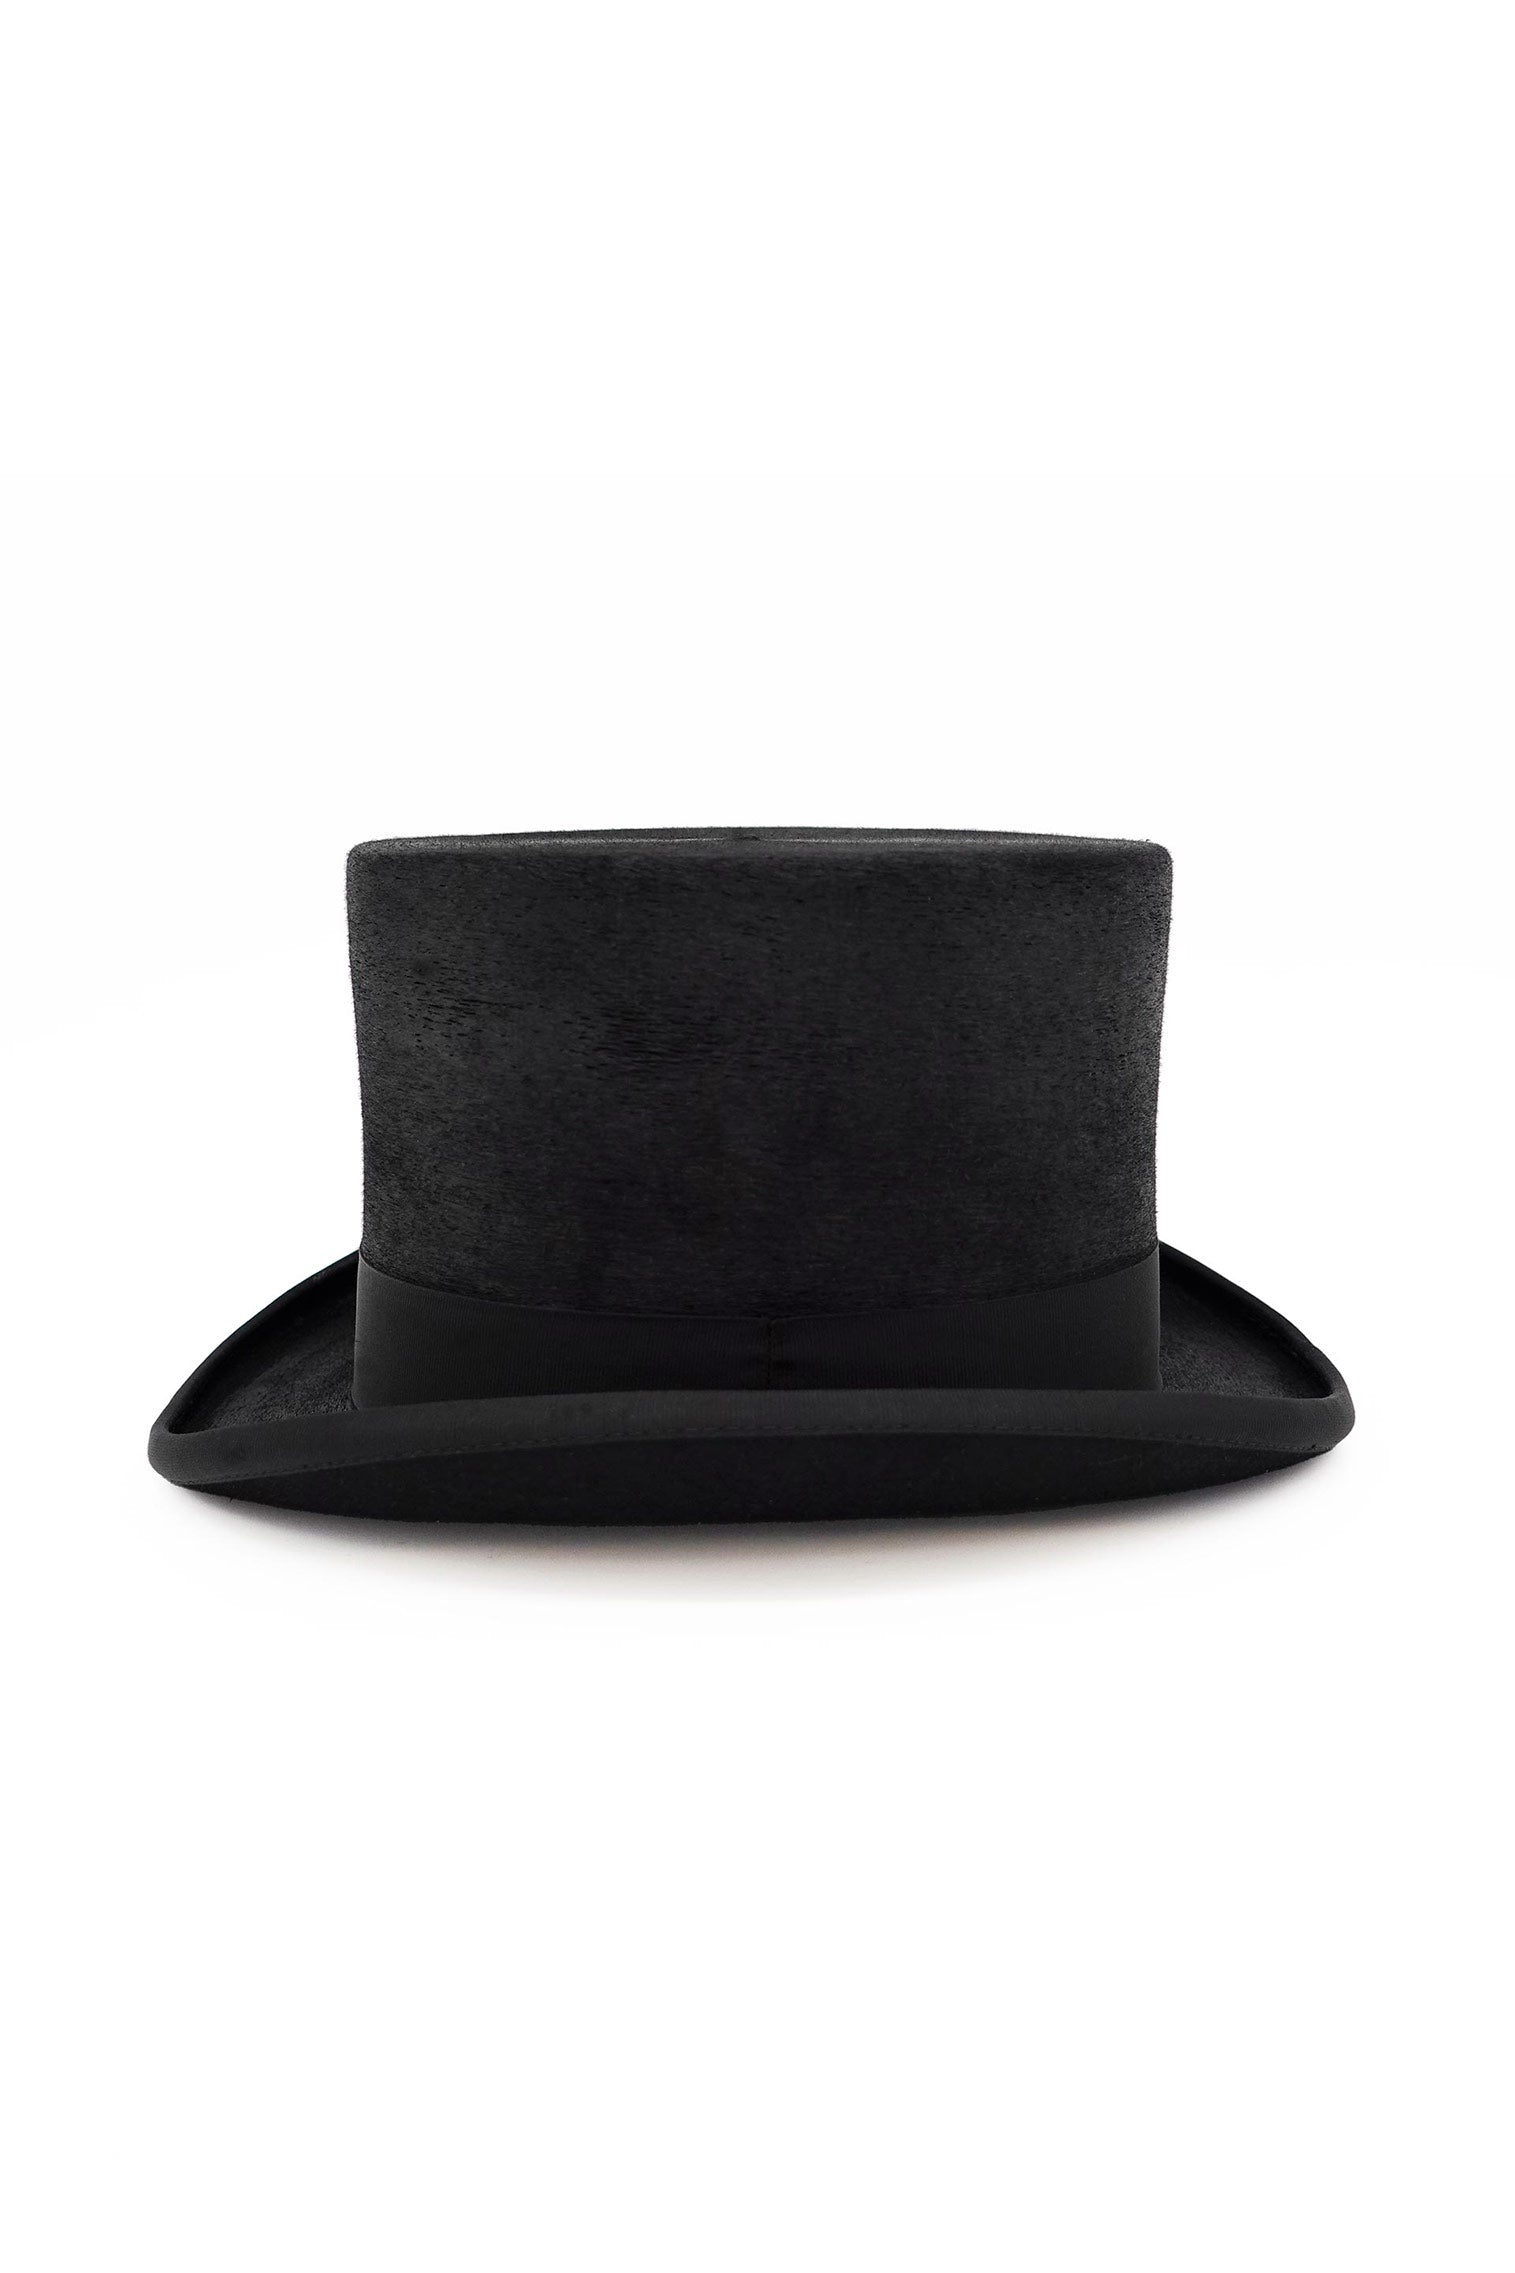 Mayfair Top Hat - Royal Ascot Hats - Lock & Co. Hatters London UK